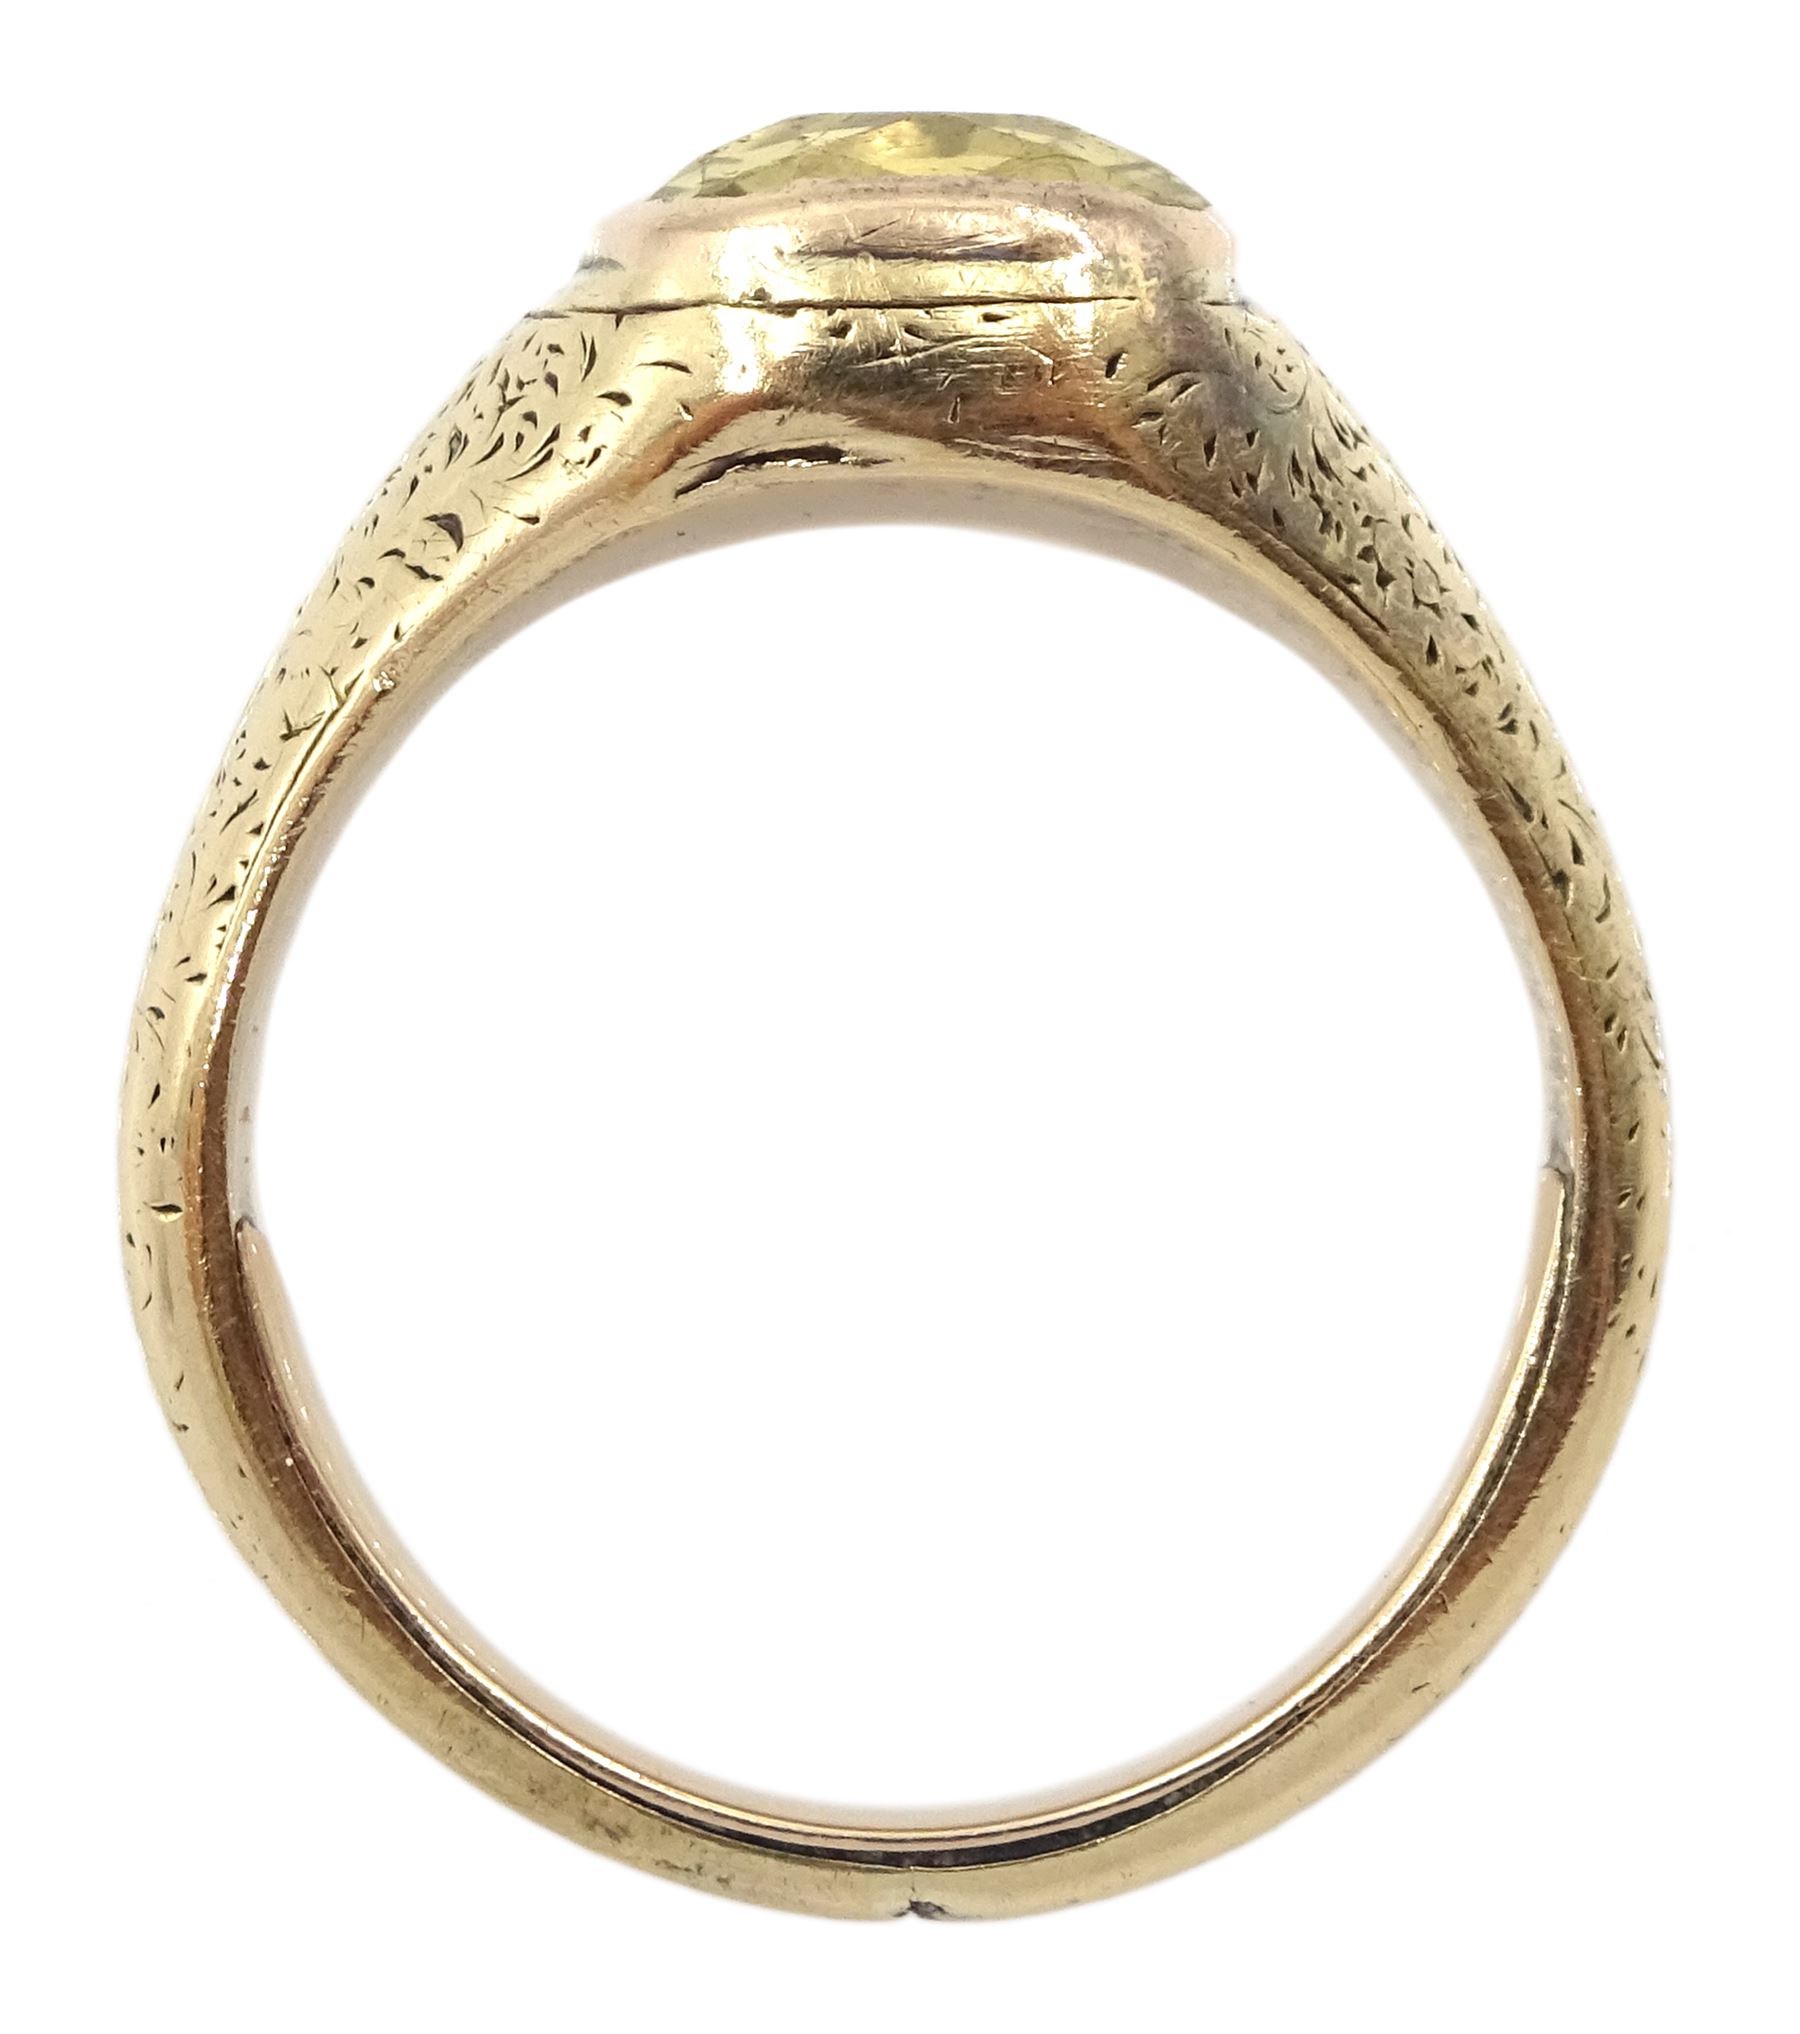 19th century gold single stone citrine ring - Image 4 of 4